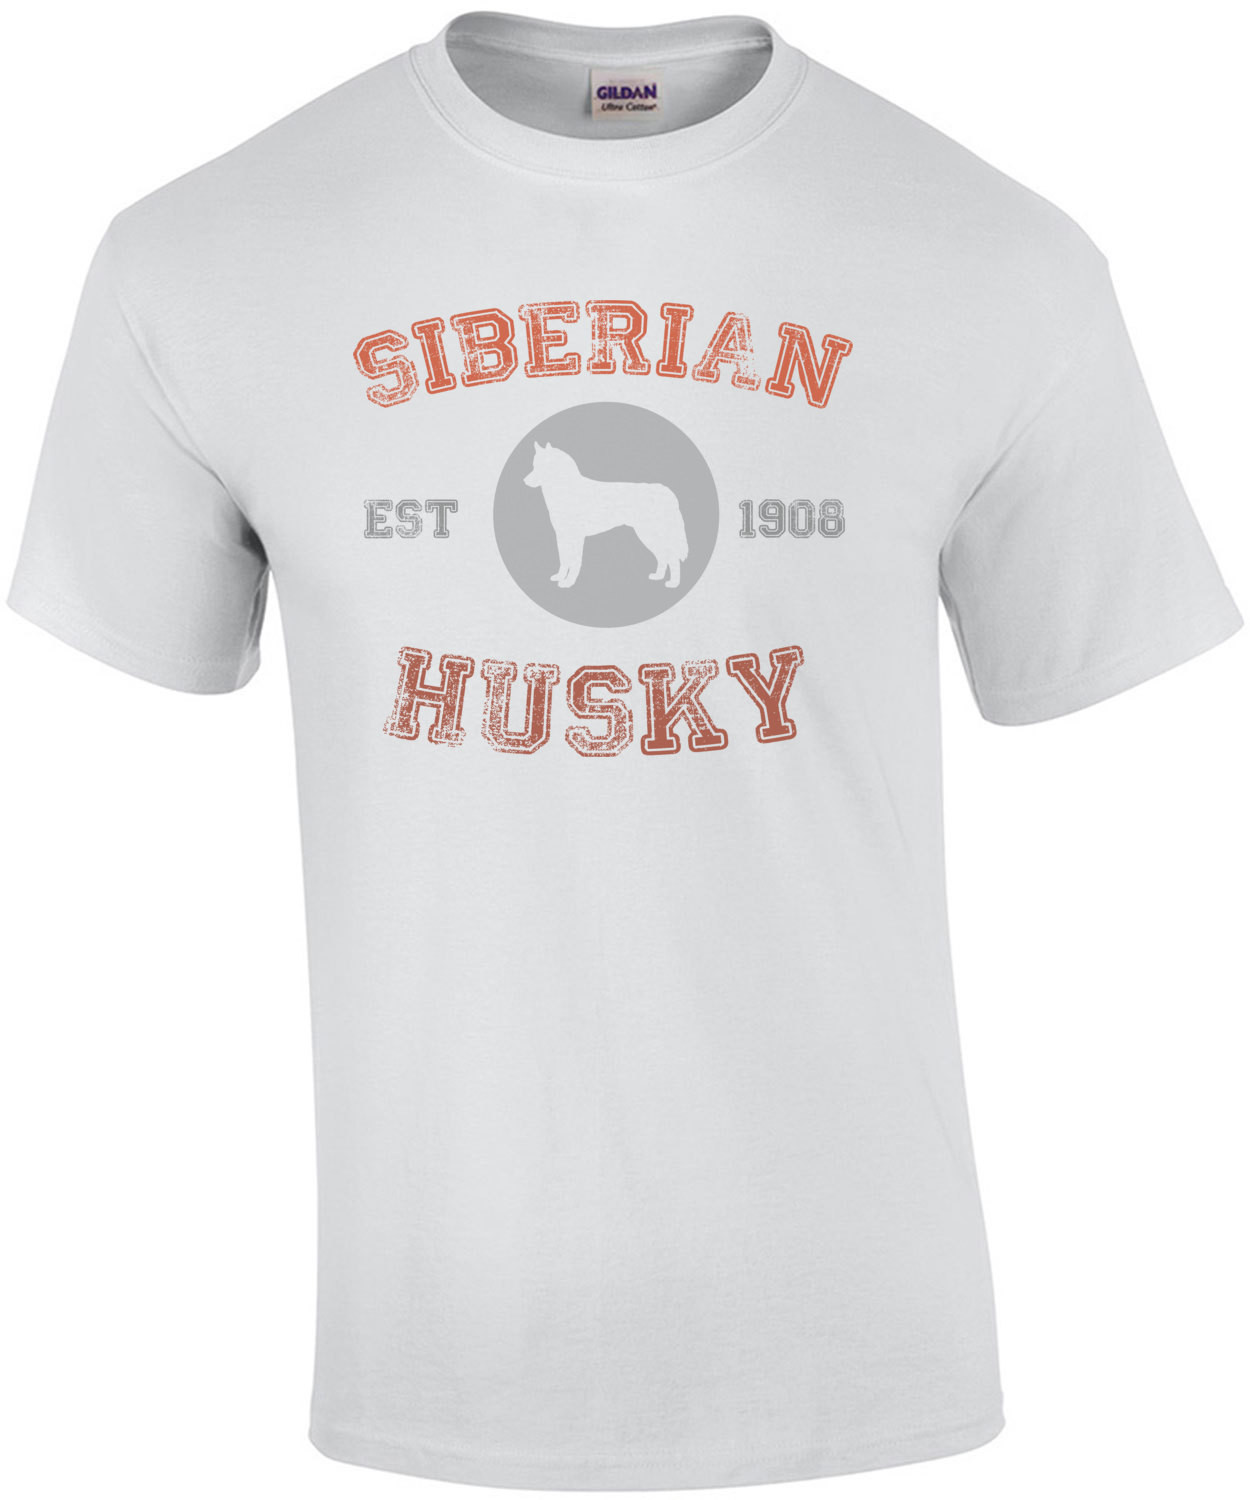 Siberian Husky Est 1908 - Siberian Husky T-Shirt